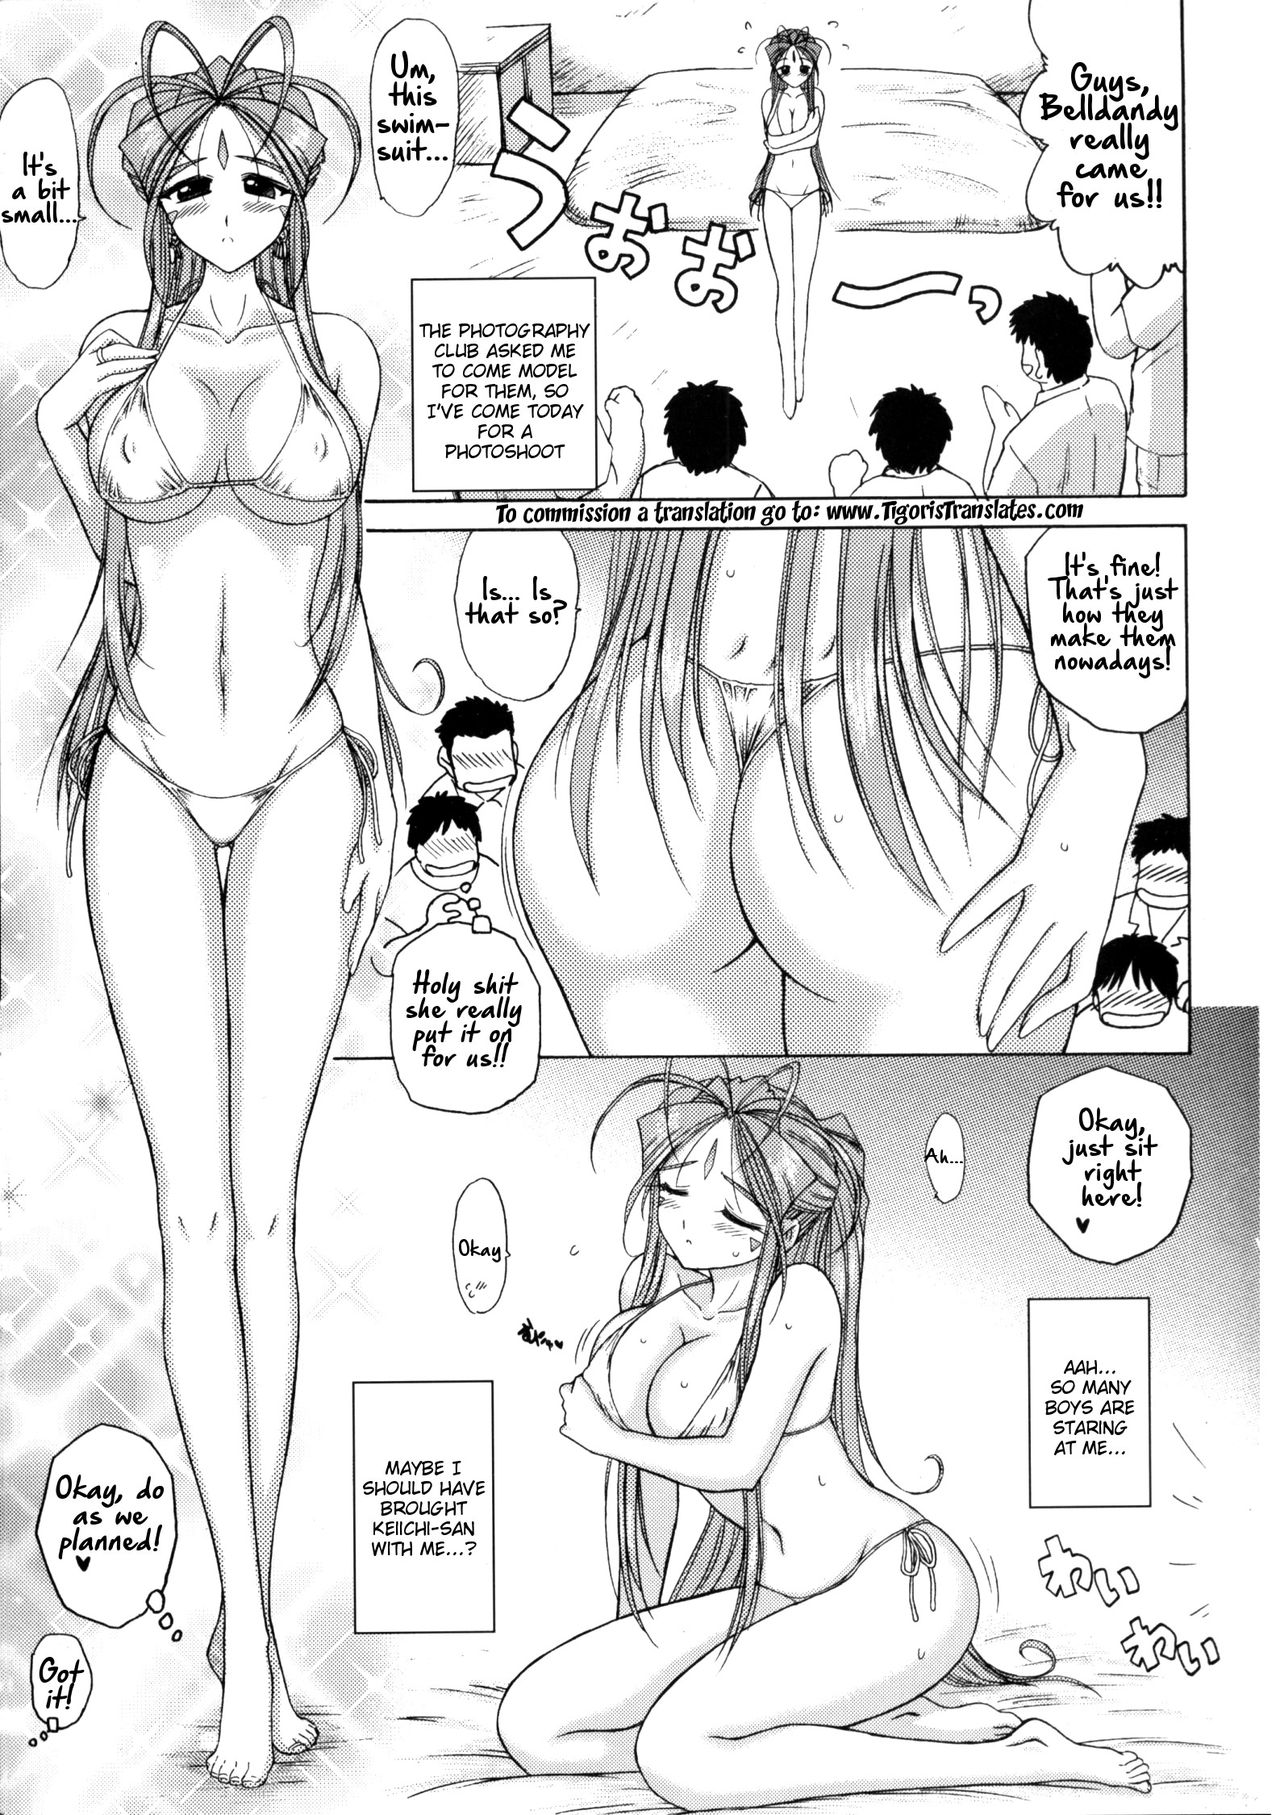 Read Midgard Ah My Goddess [english] Hentai Online Porn Manga And Doujinshi